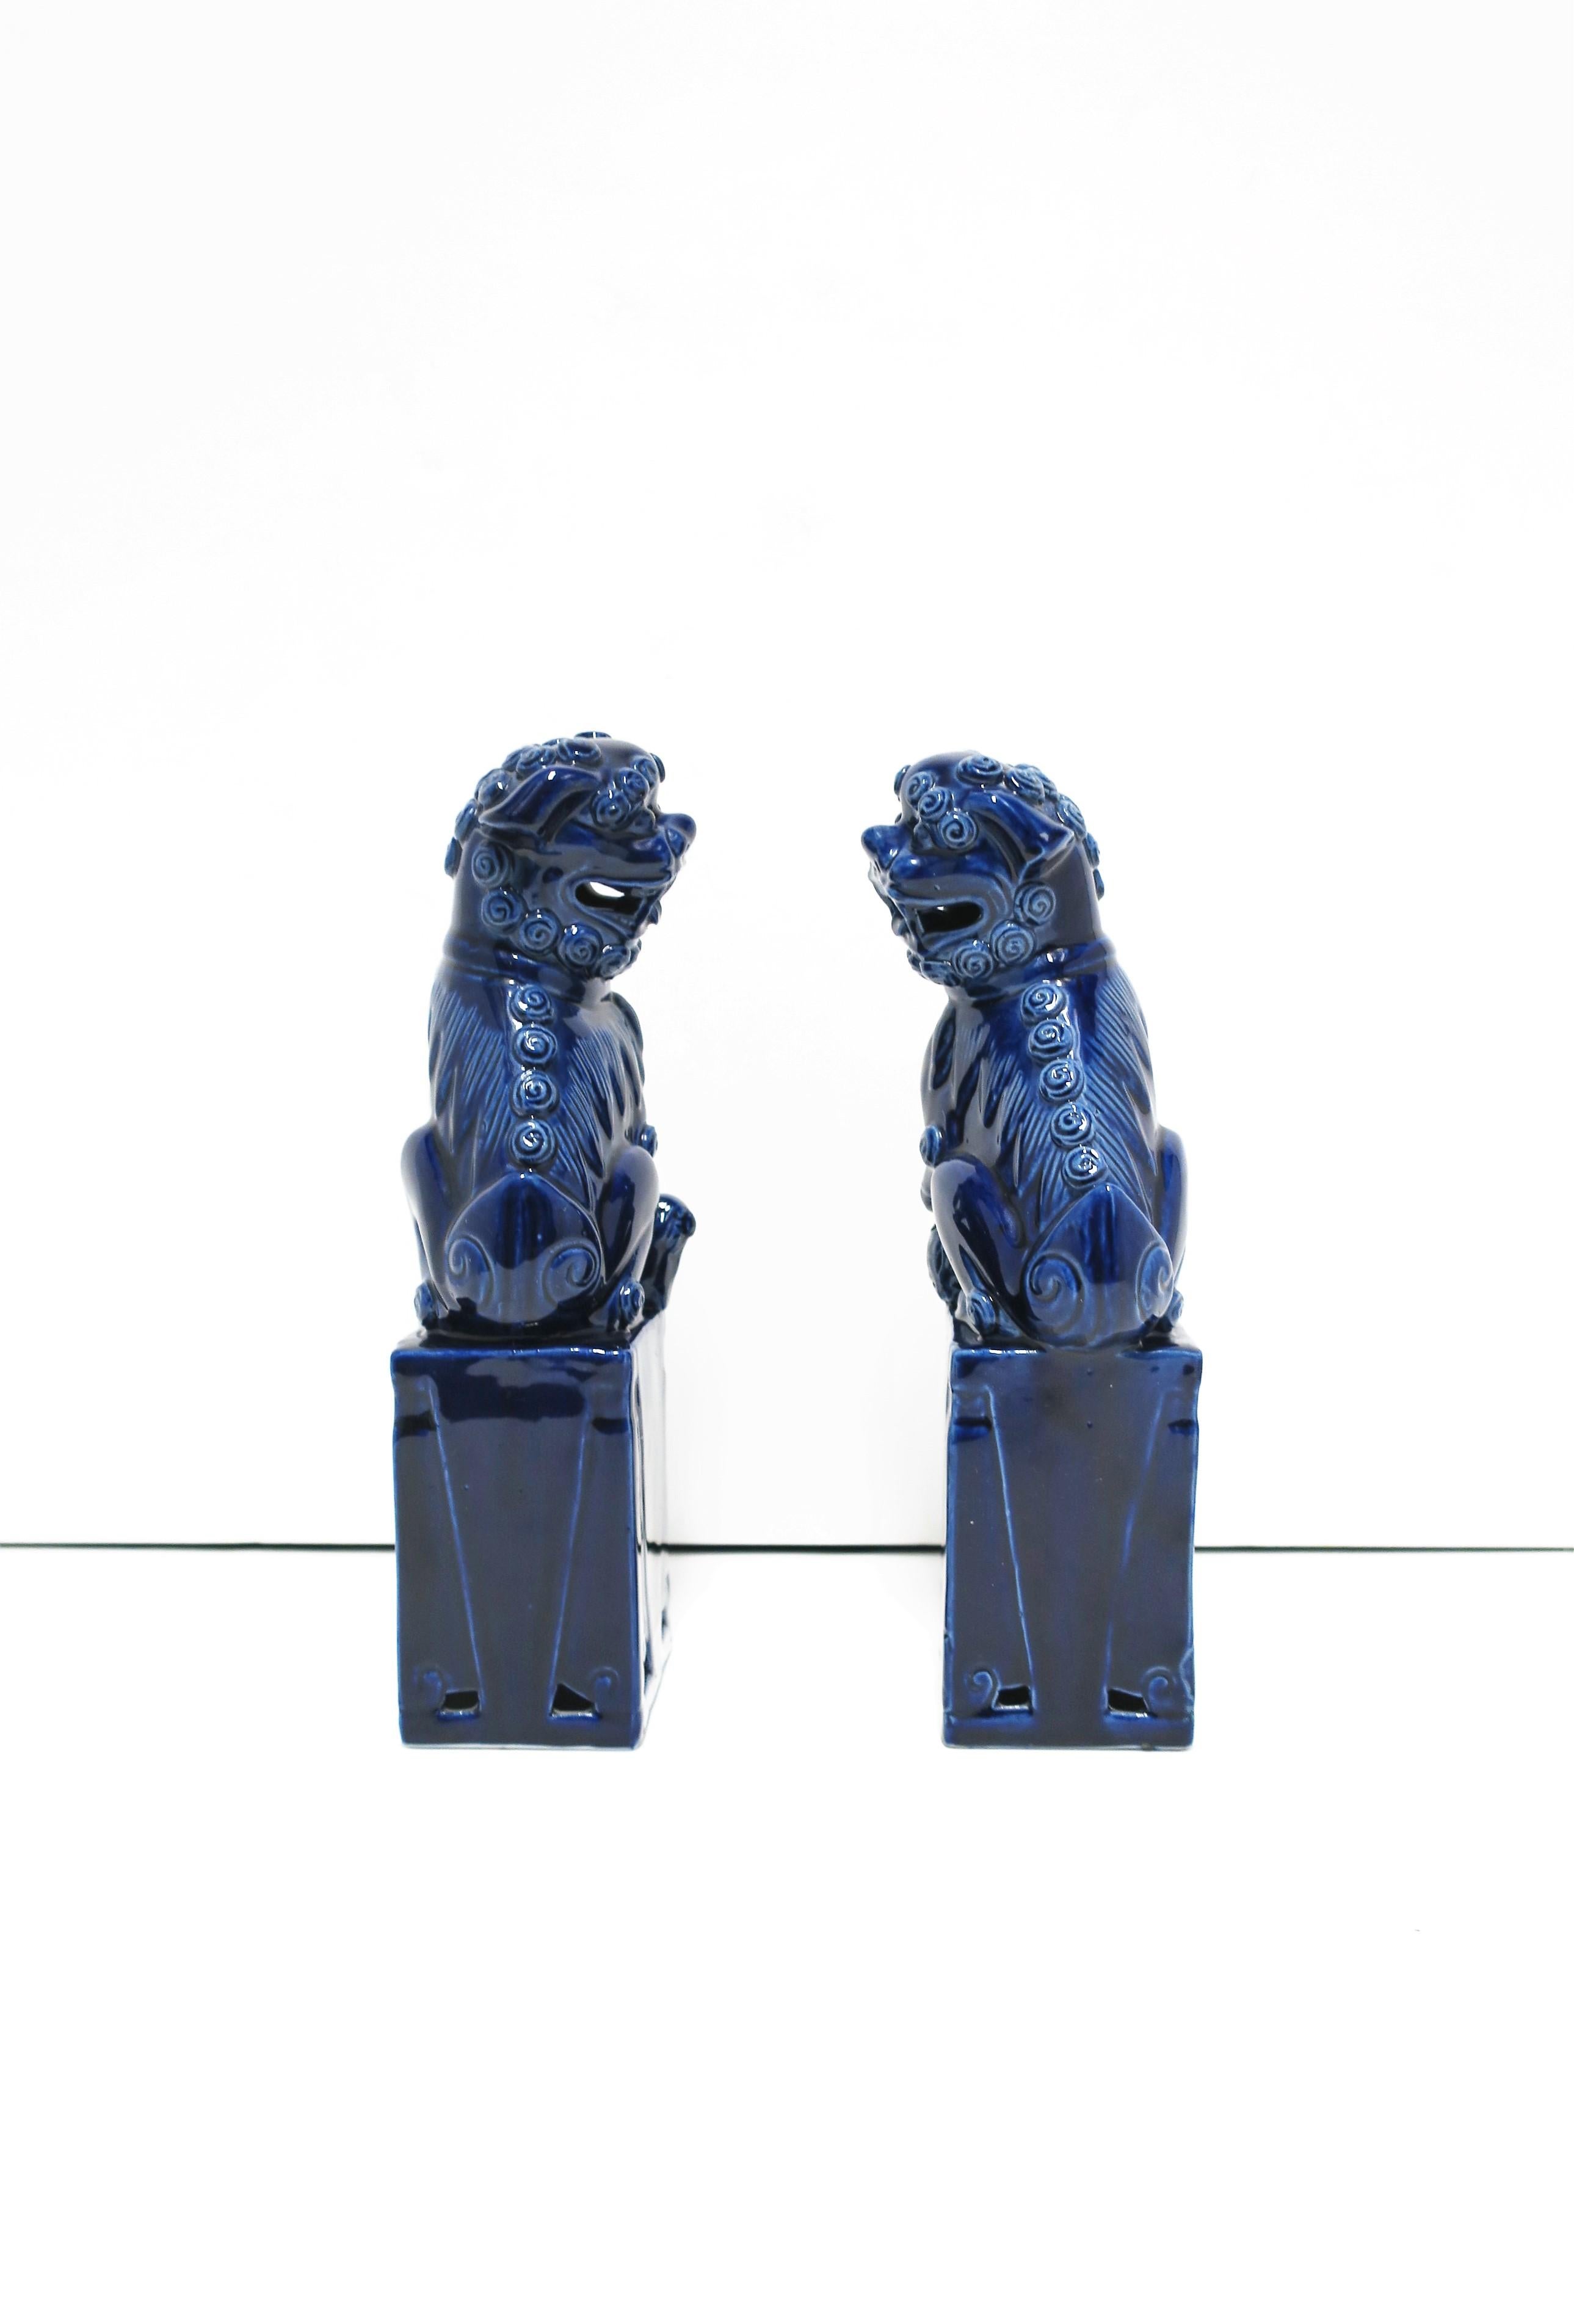 Blue Lion Foo Dogs, Pair 2